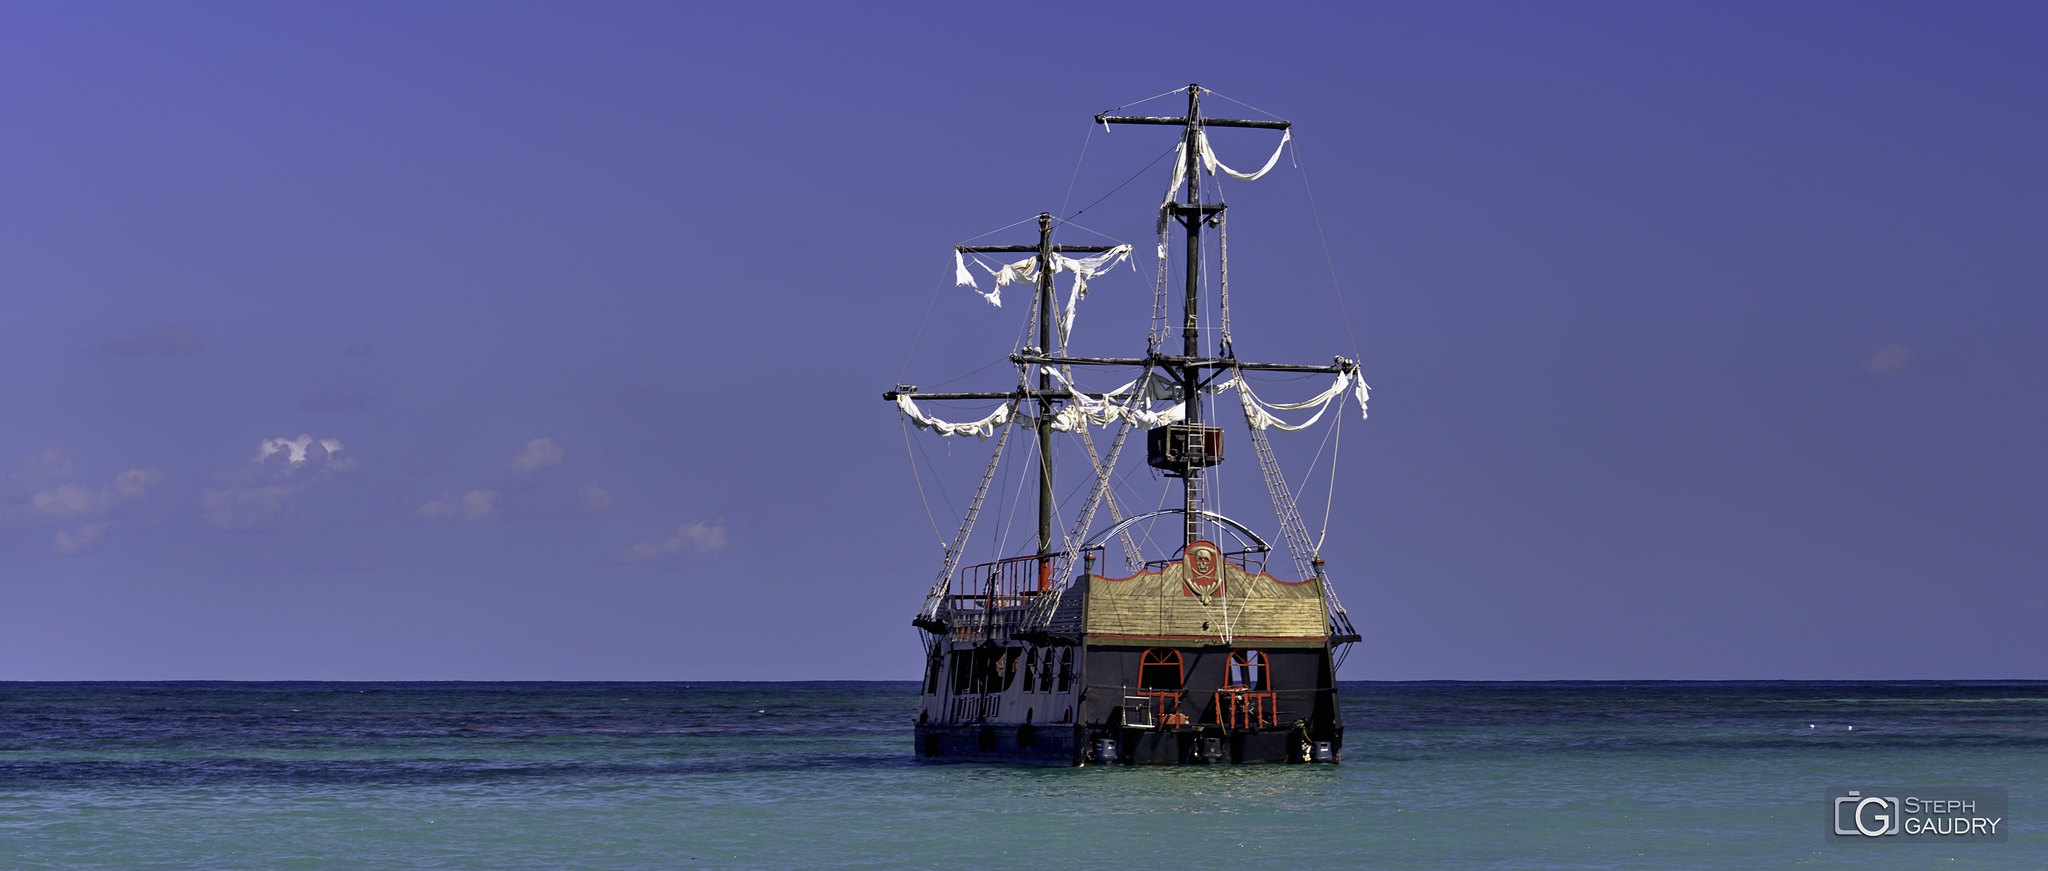 (Faux) Pirates des (vraies) Caraïbes [Click to start slideshow]